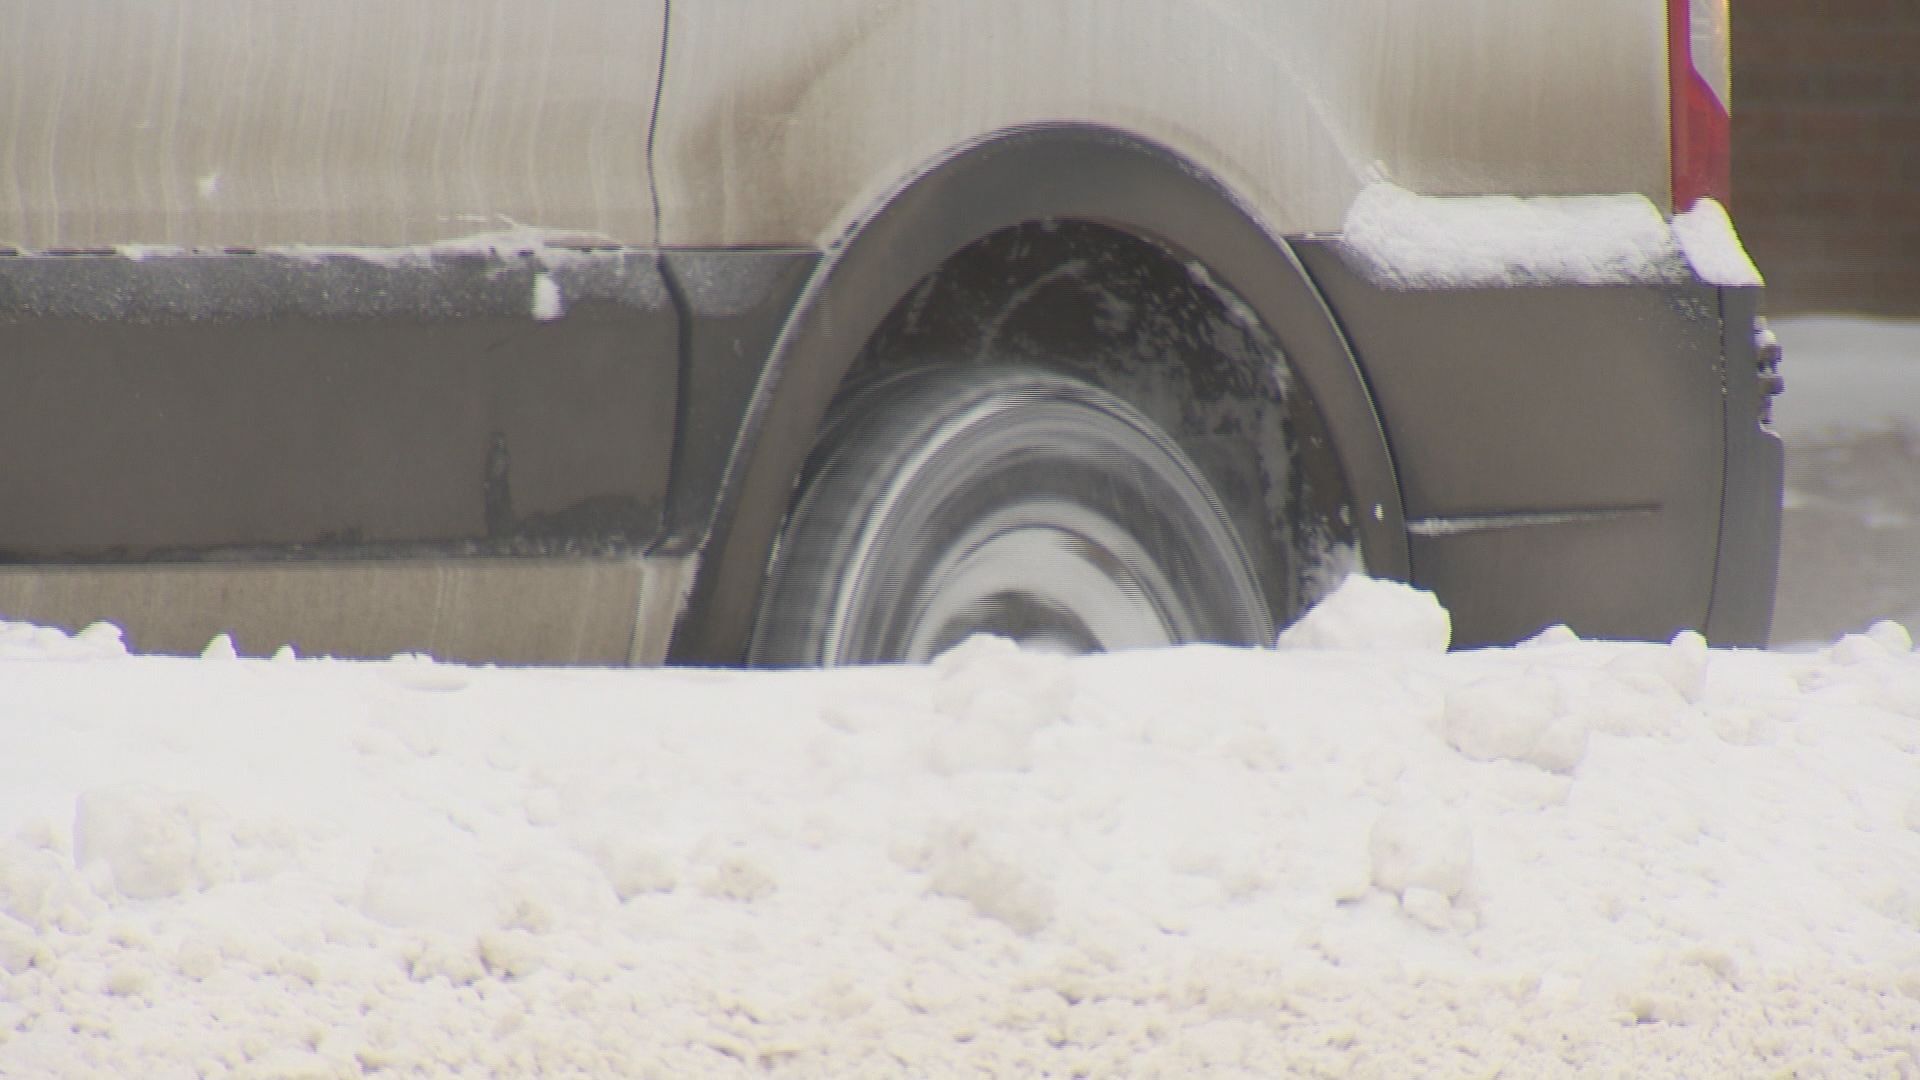 Edmonton declares Phase 1 parking ban as crews clear snow